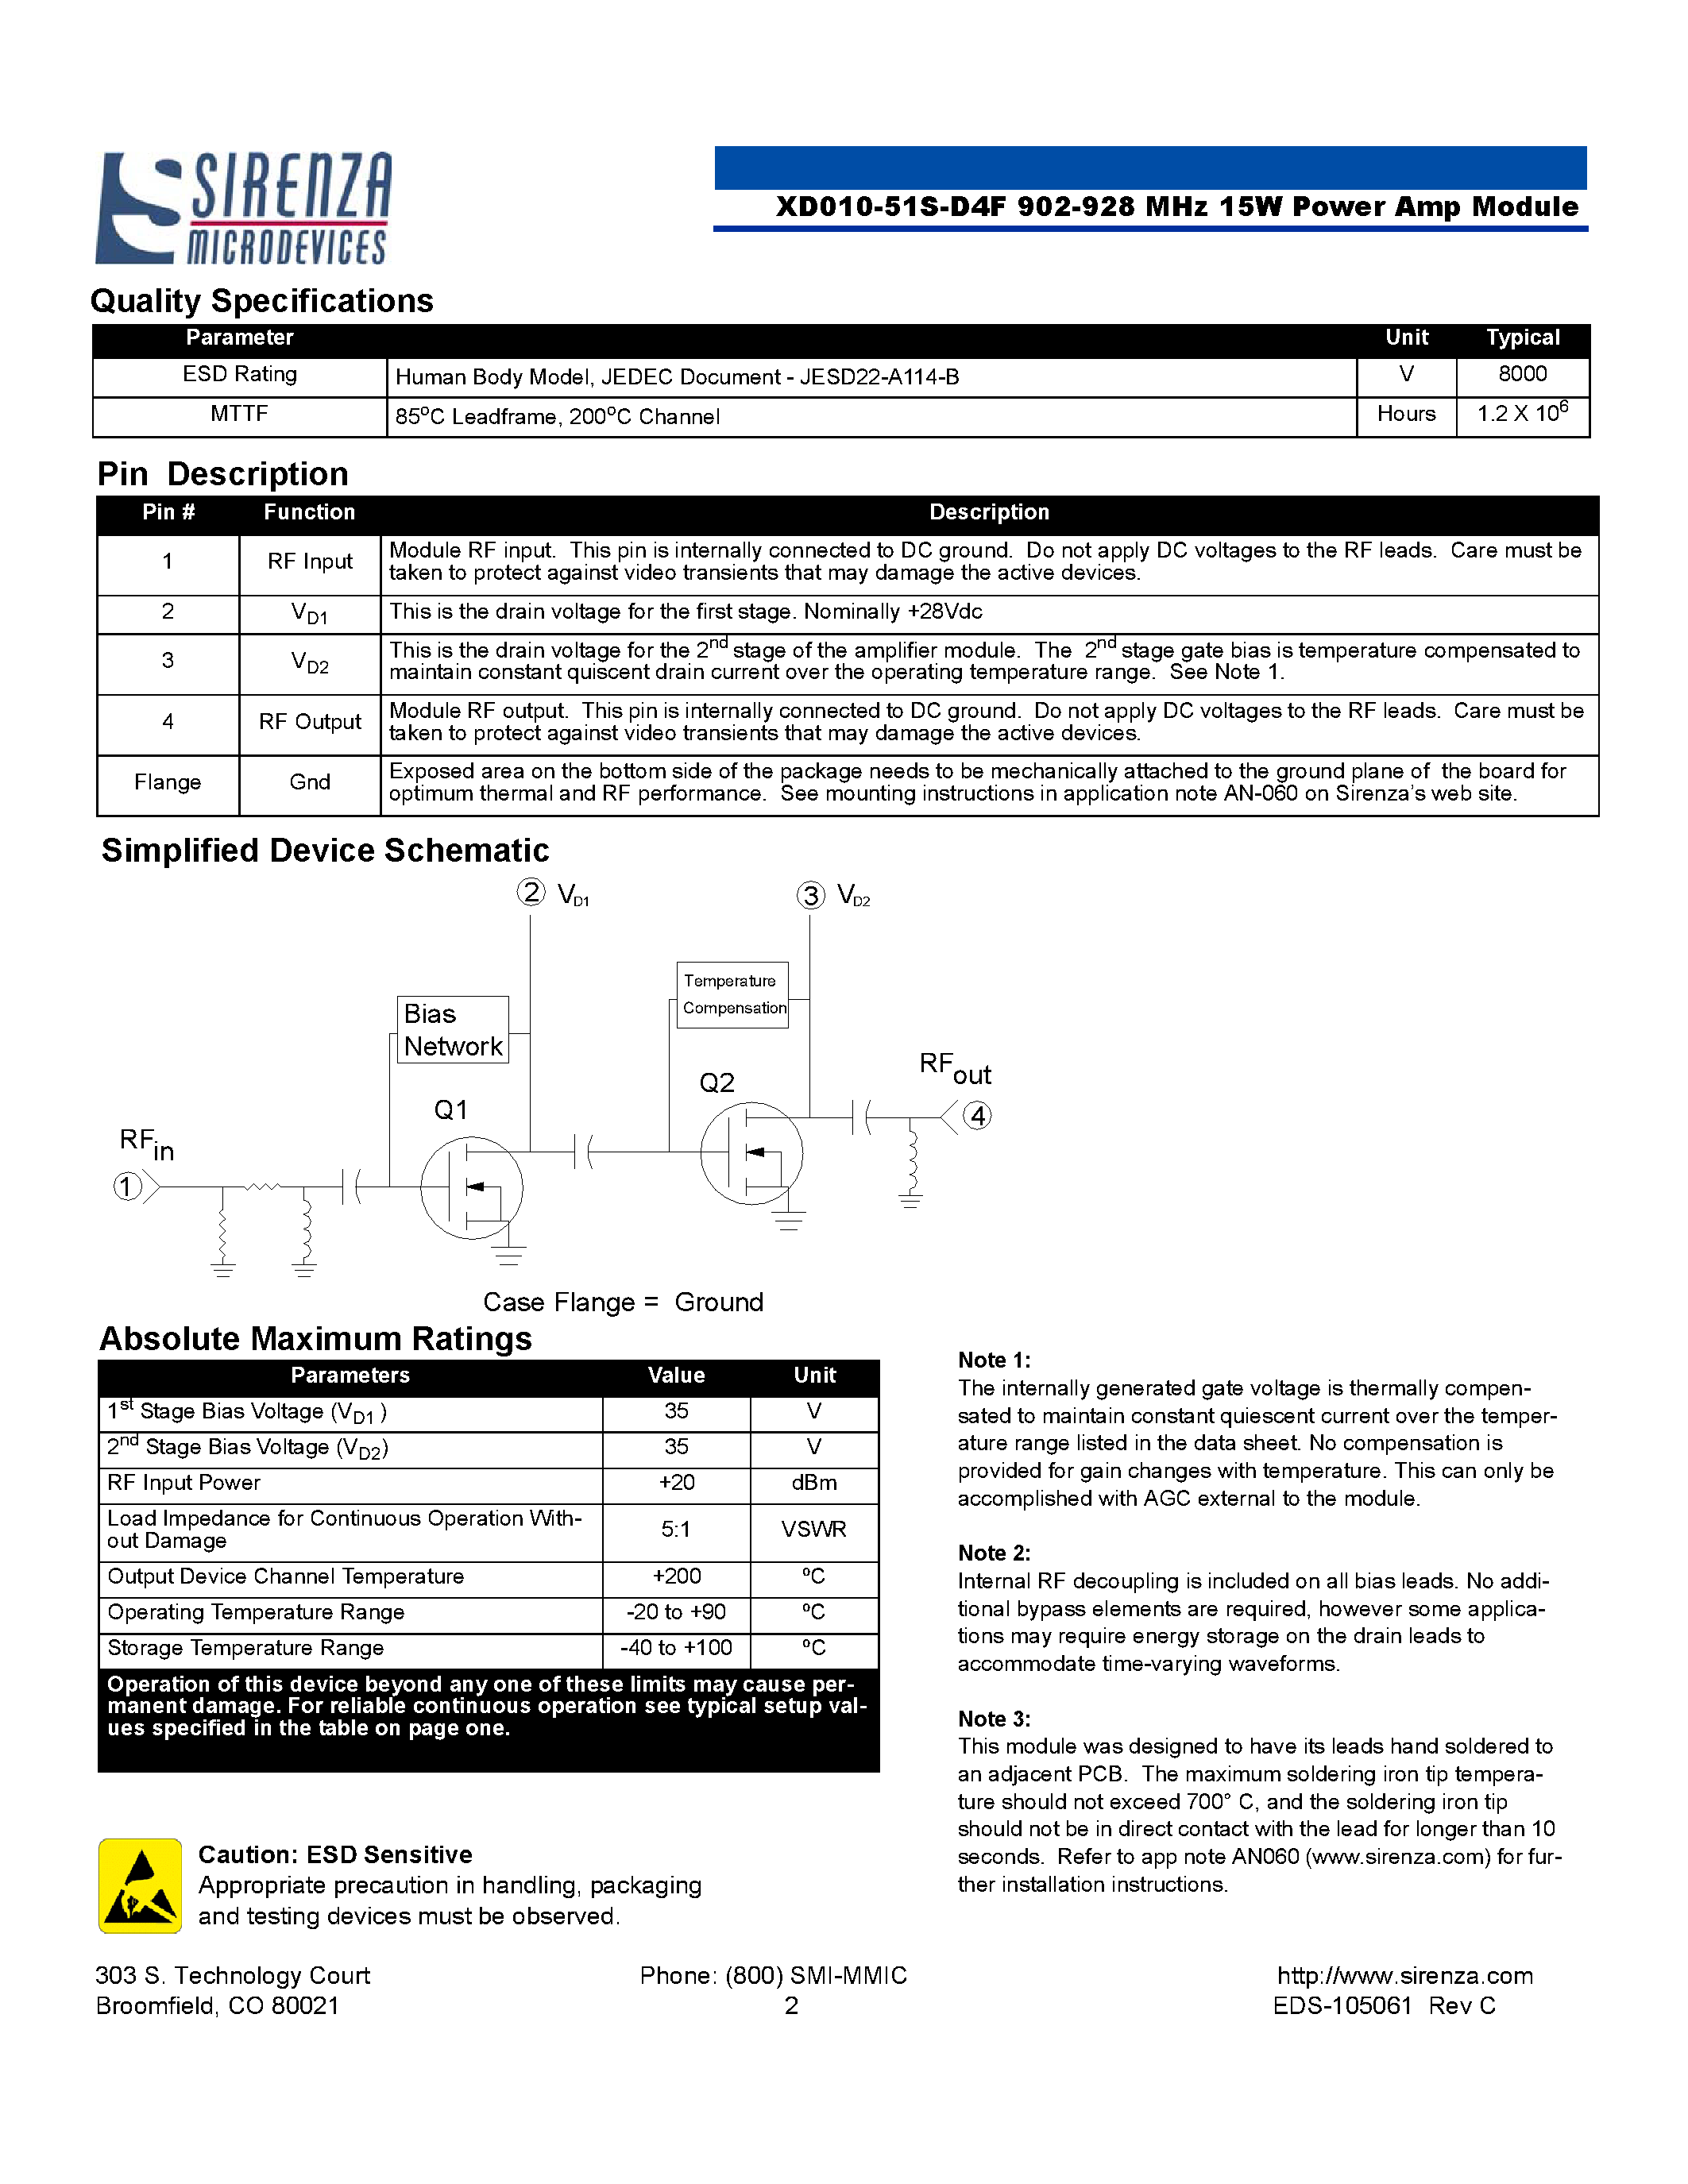 Datasheet XD010-51S-D4F - Class A/AB 15W Power Amplifier Module page 2